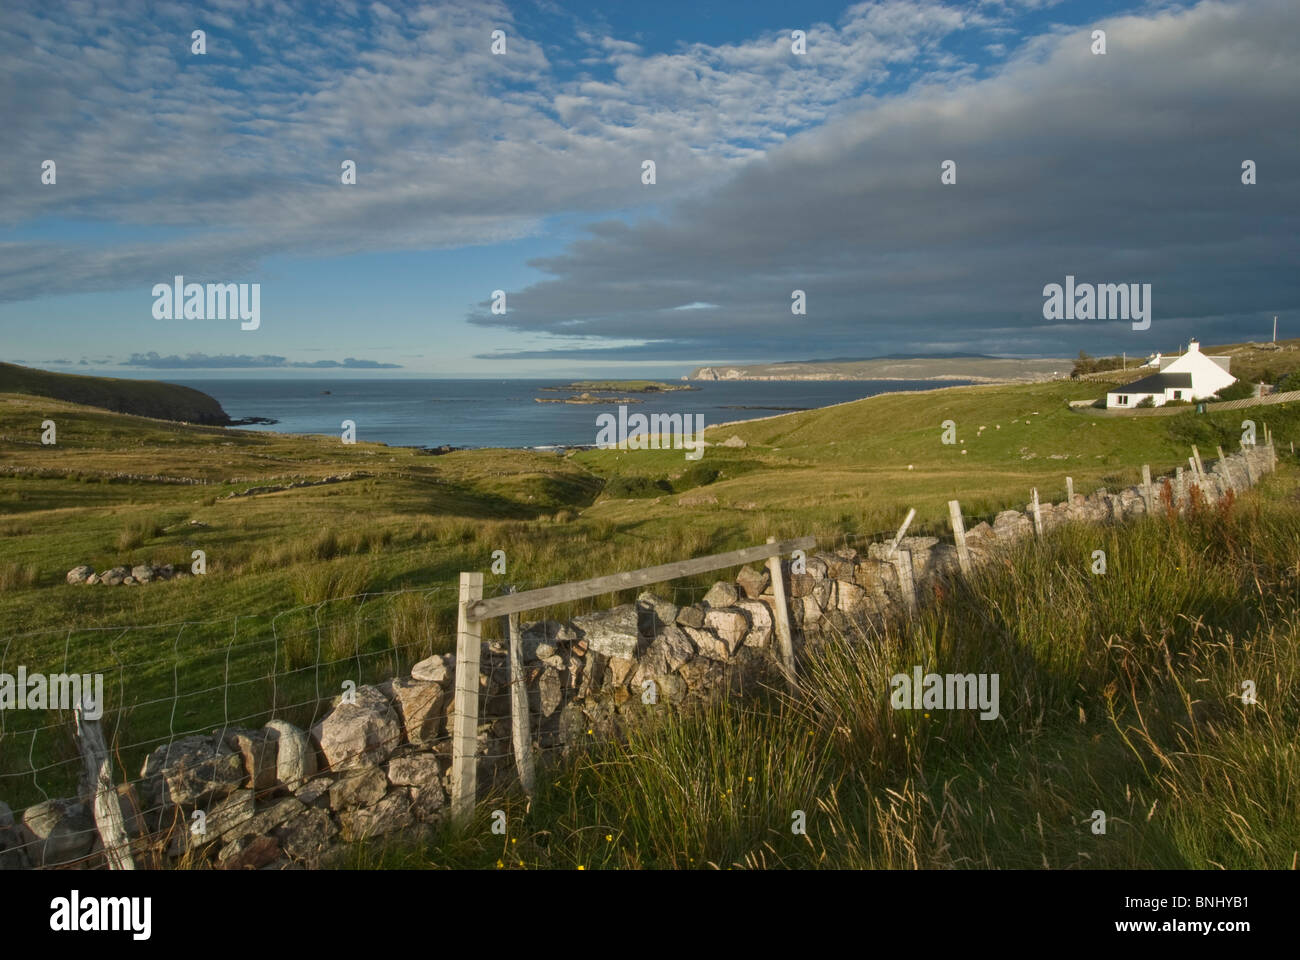 Sea near Durness, Sutherland, Scotland. Old stone wall. Hillside farming near sea. Stock Photo